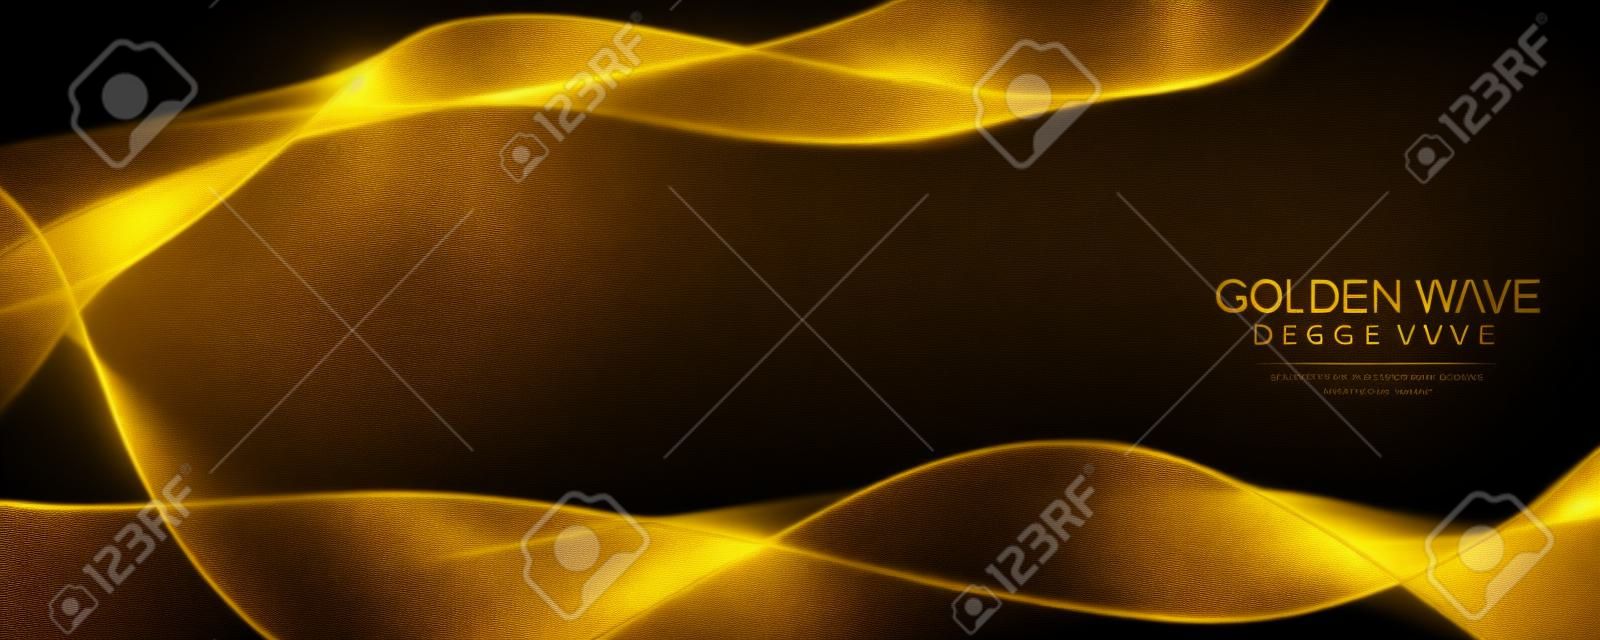 Luxe gouden golven ontwerp op zwarte achtergrond